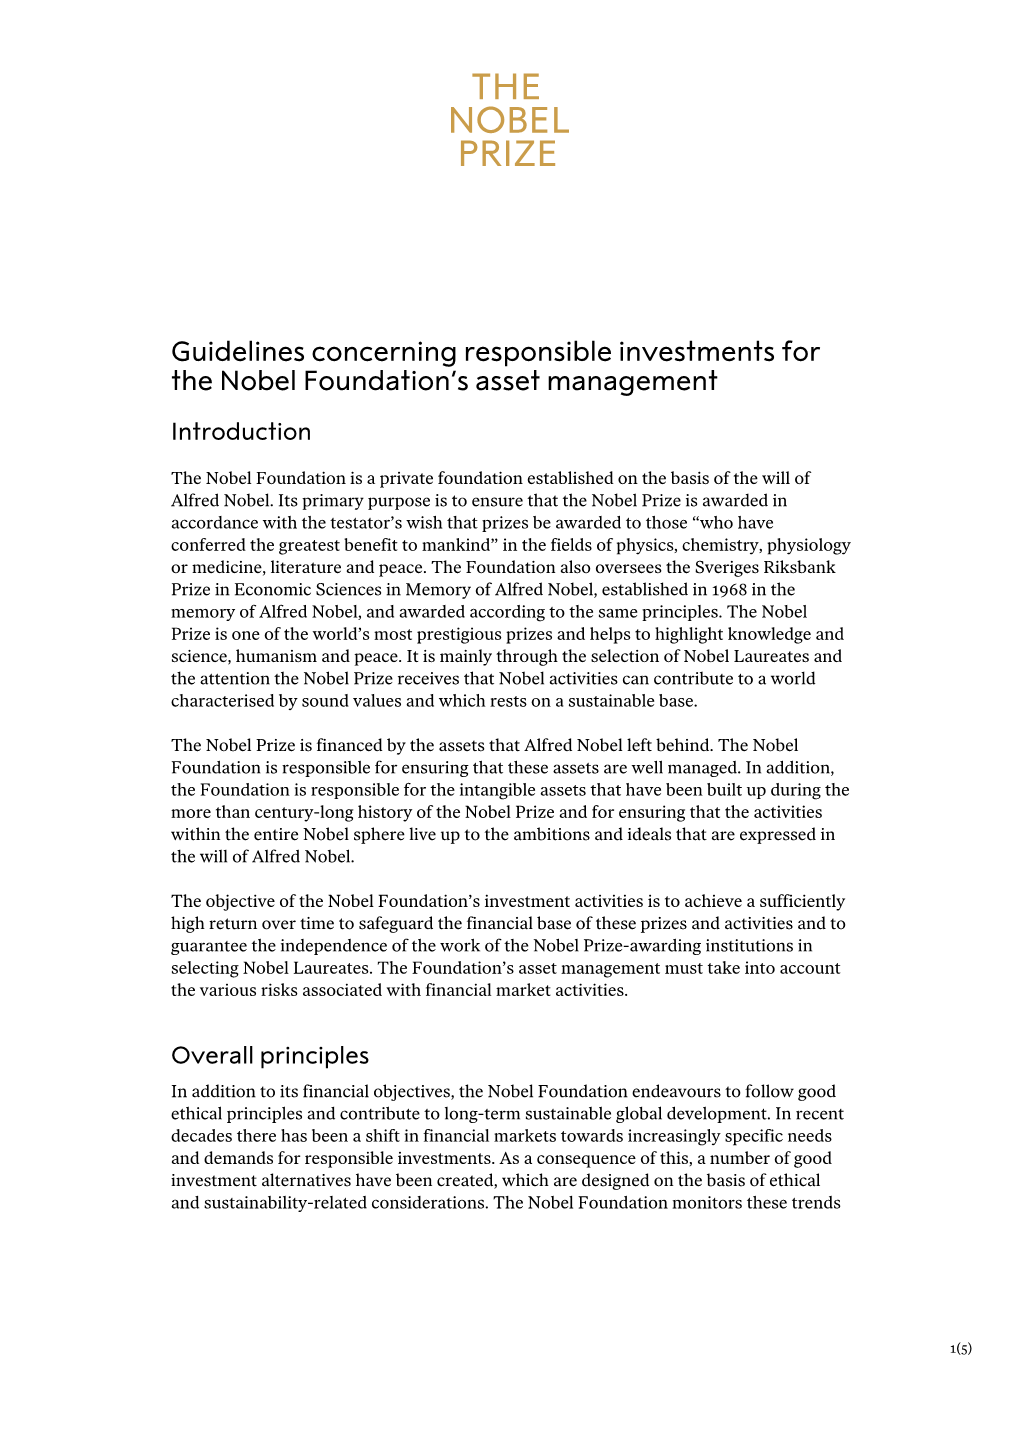 Guidelines Concerning Responsible Investments for the Nobel Foundation’S Asset Management